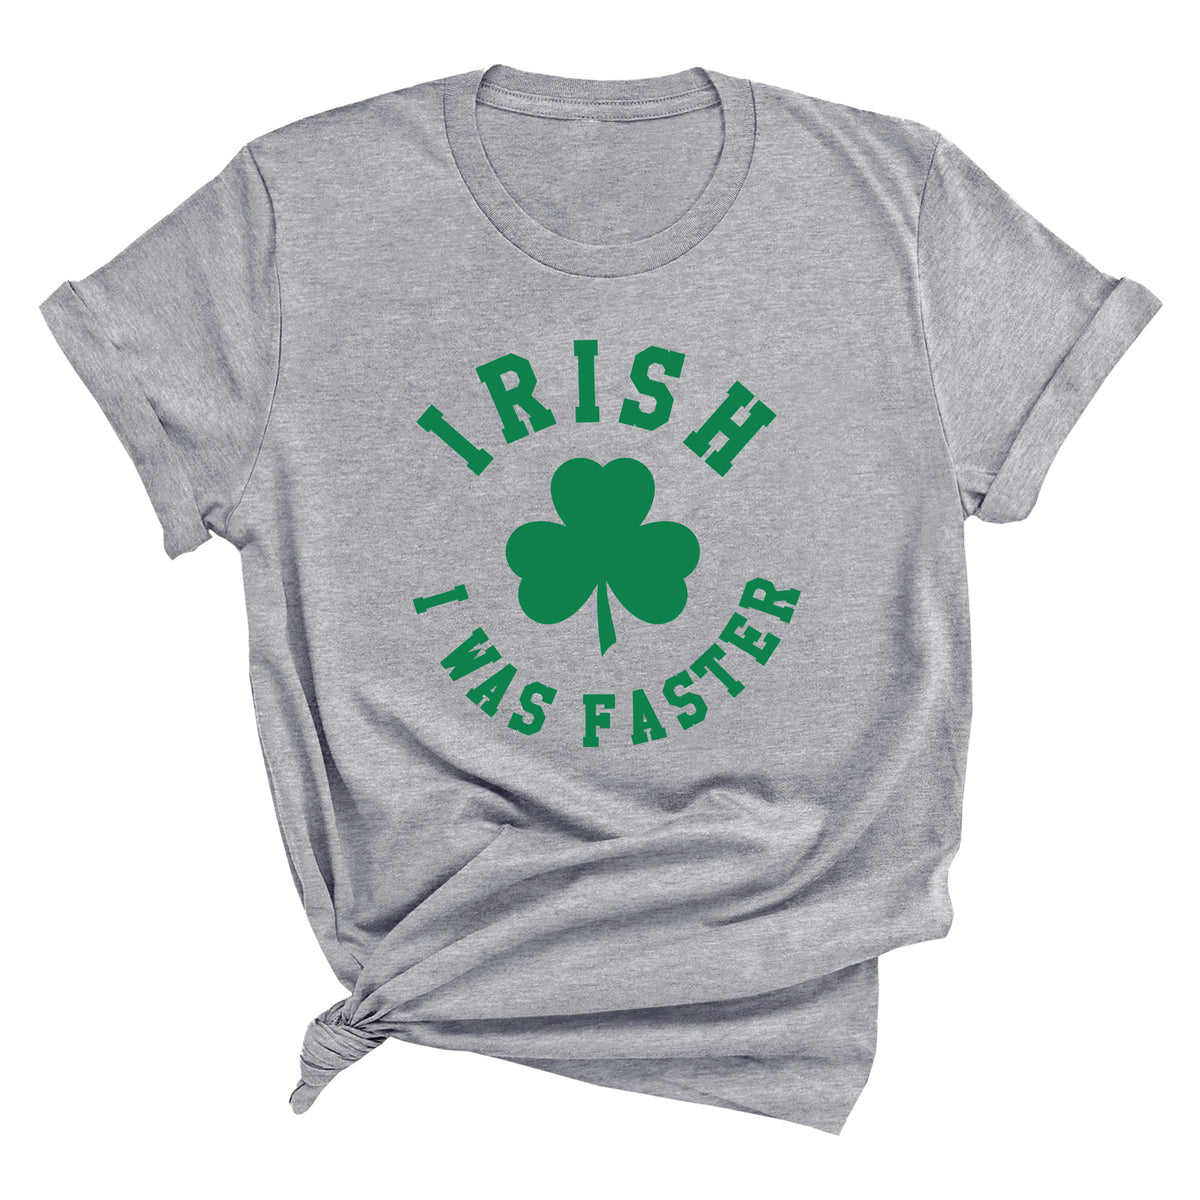 Irish I Was Faster Unisex T-Shirt